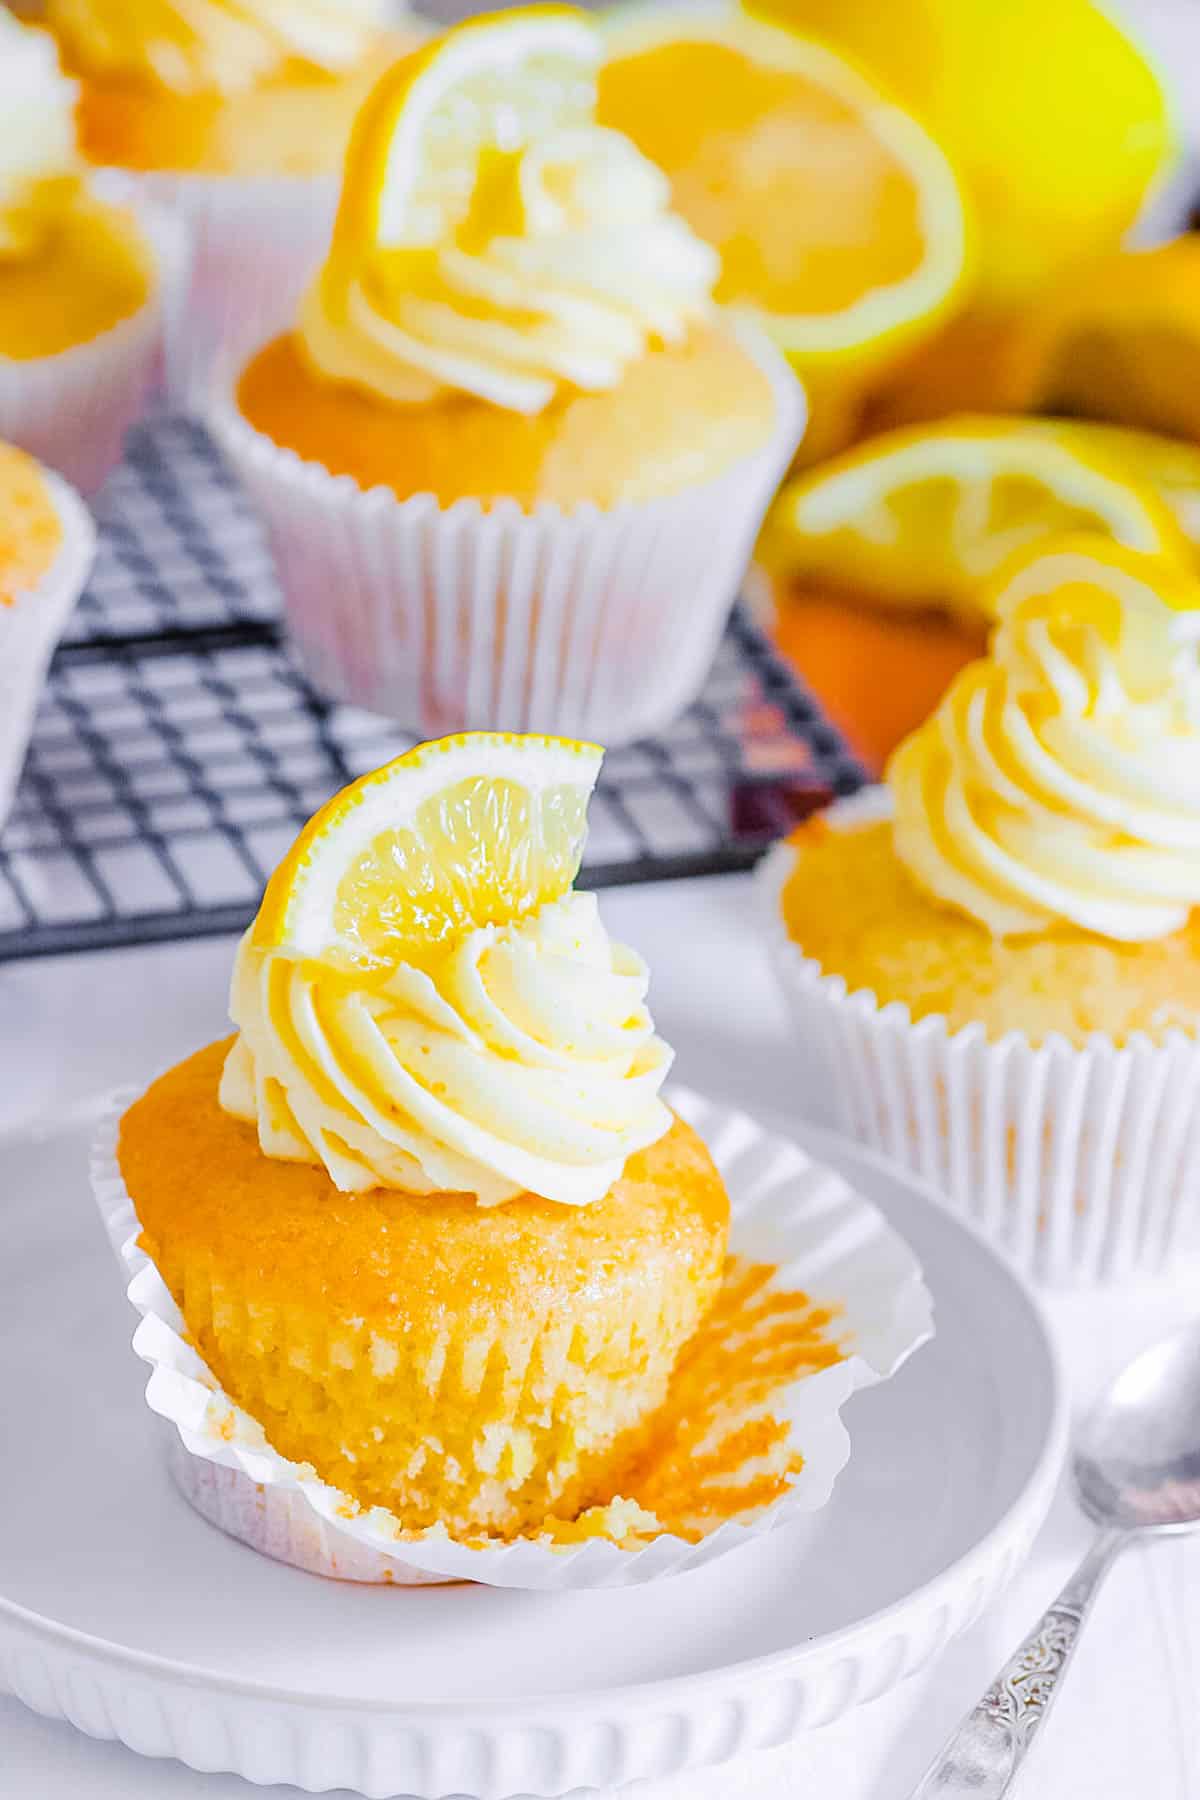 Vegan lemon cupcakes topped with vegan ،ercream frosting and a lemon wedge.